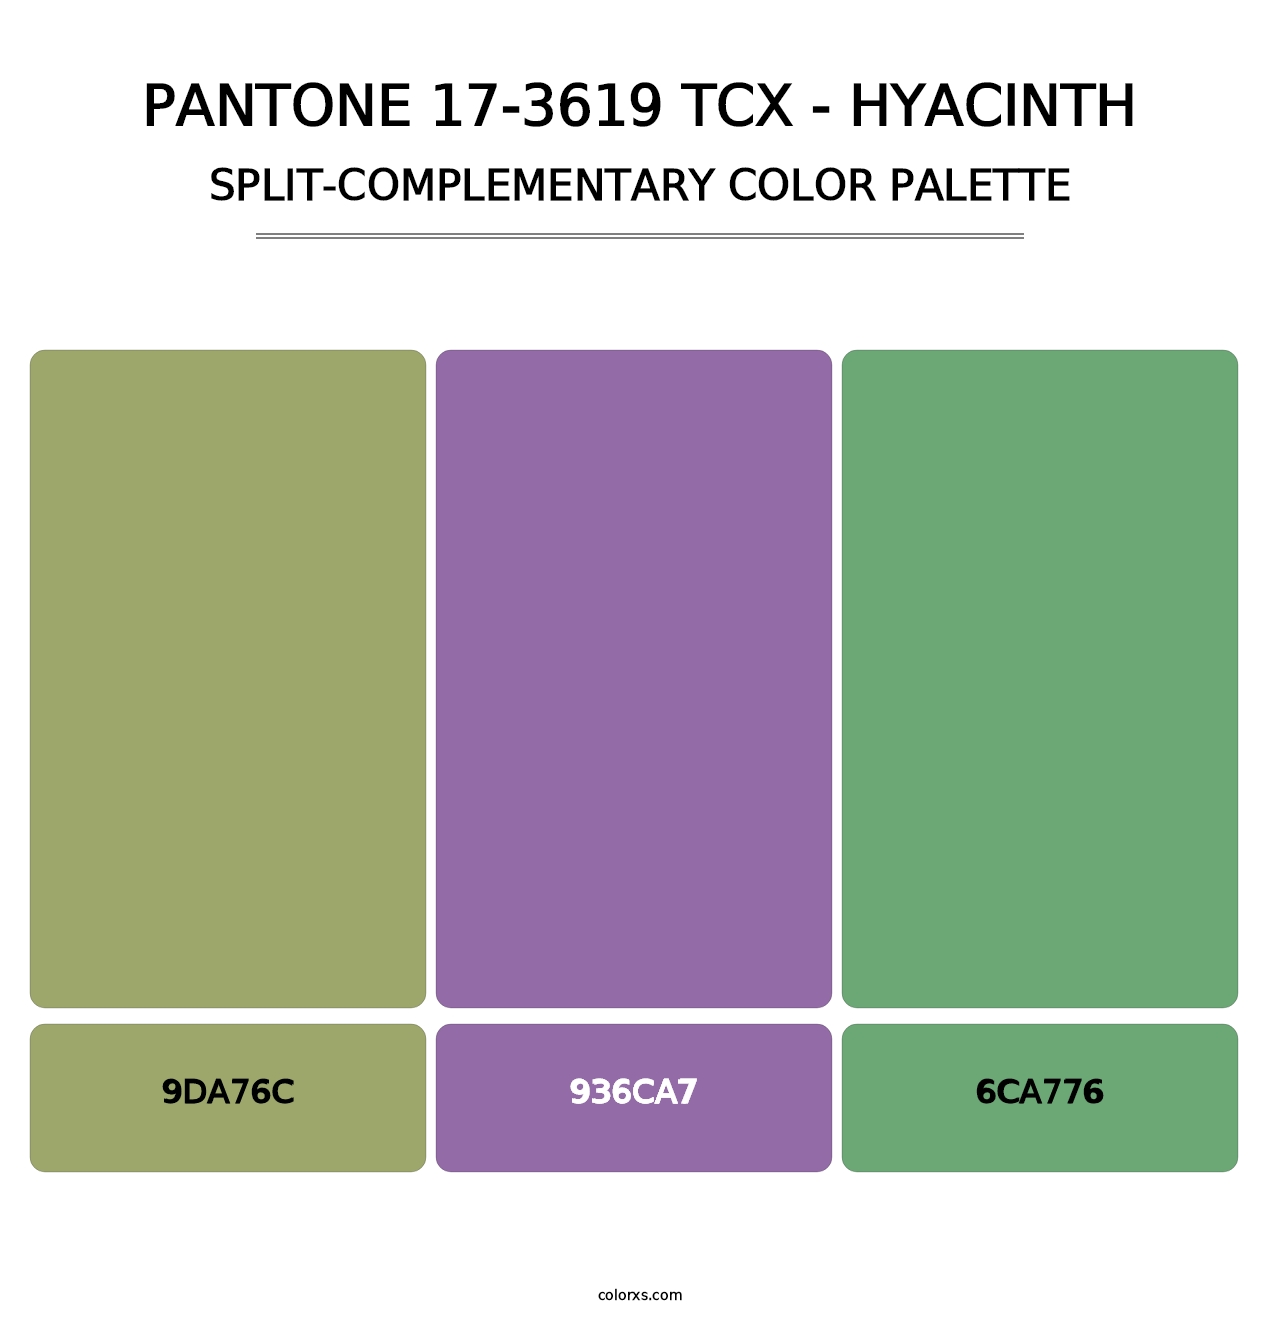 PANTONE 17-3619 TCX - Hyacinth - Split-Complementary Color Palette